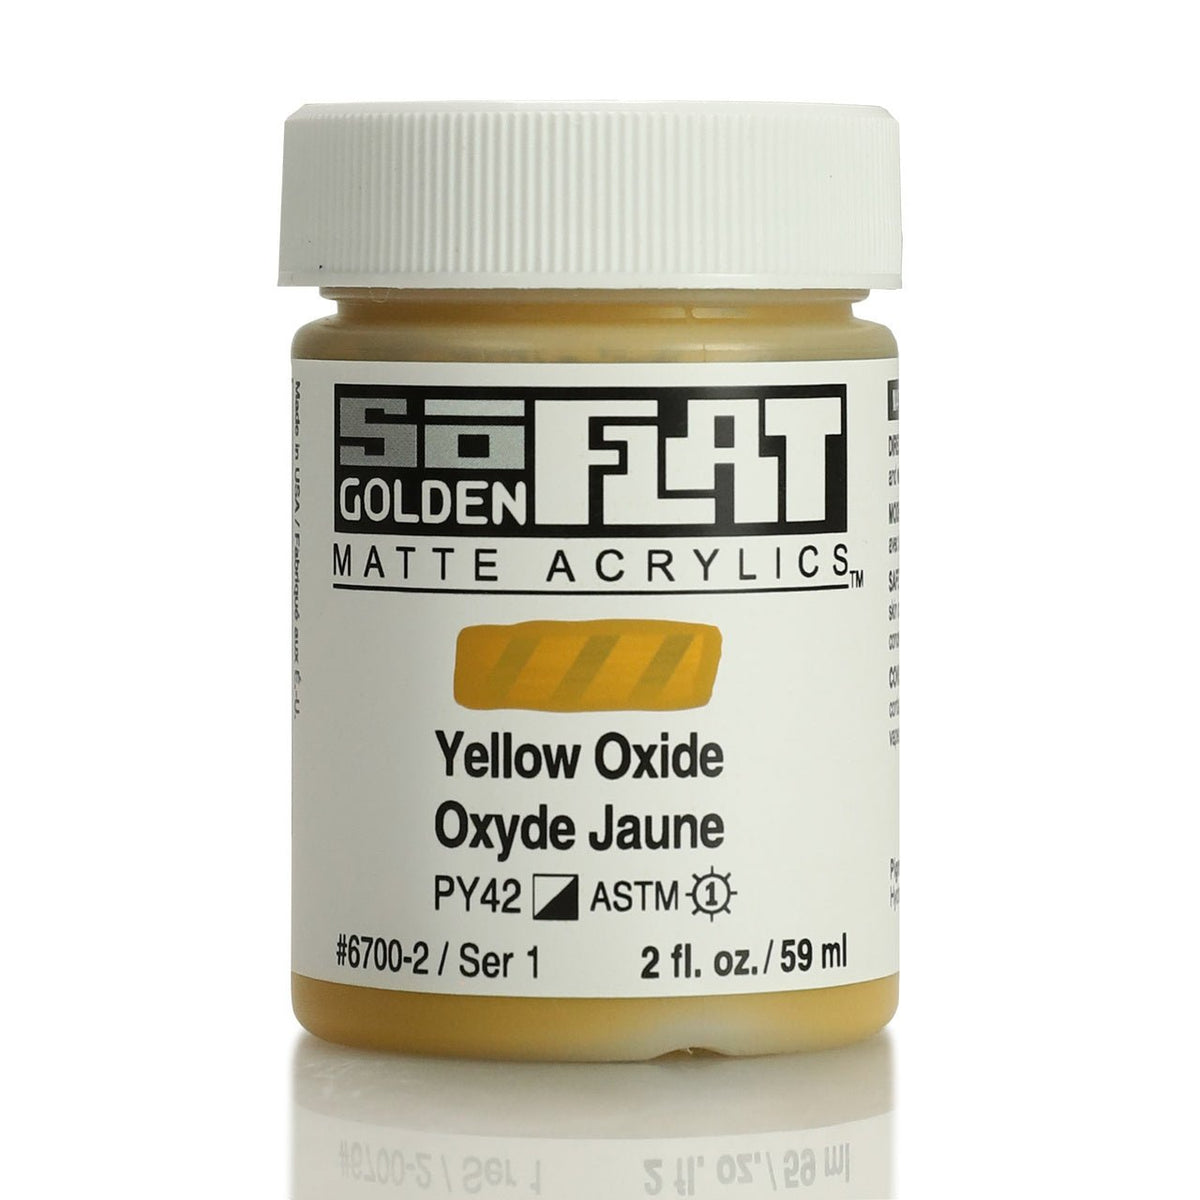 Golden SoFlat Matte Acrylic Paint - Yellow Oxide 2 oz jar - merriartist.com